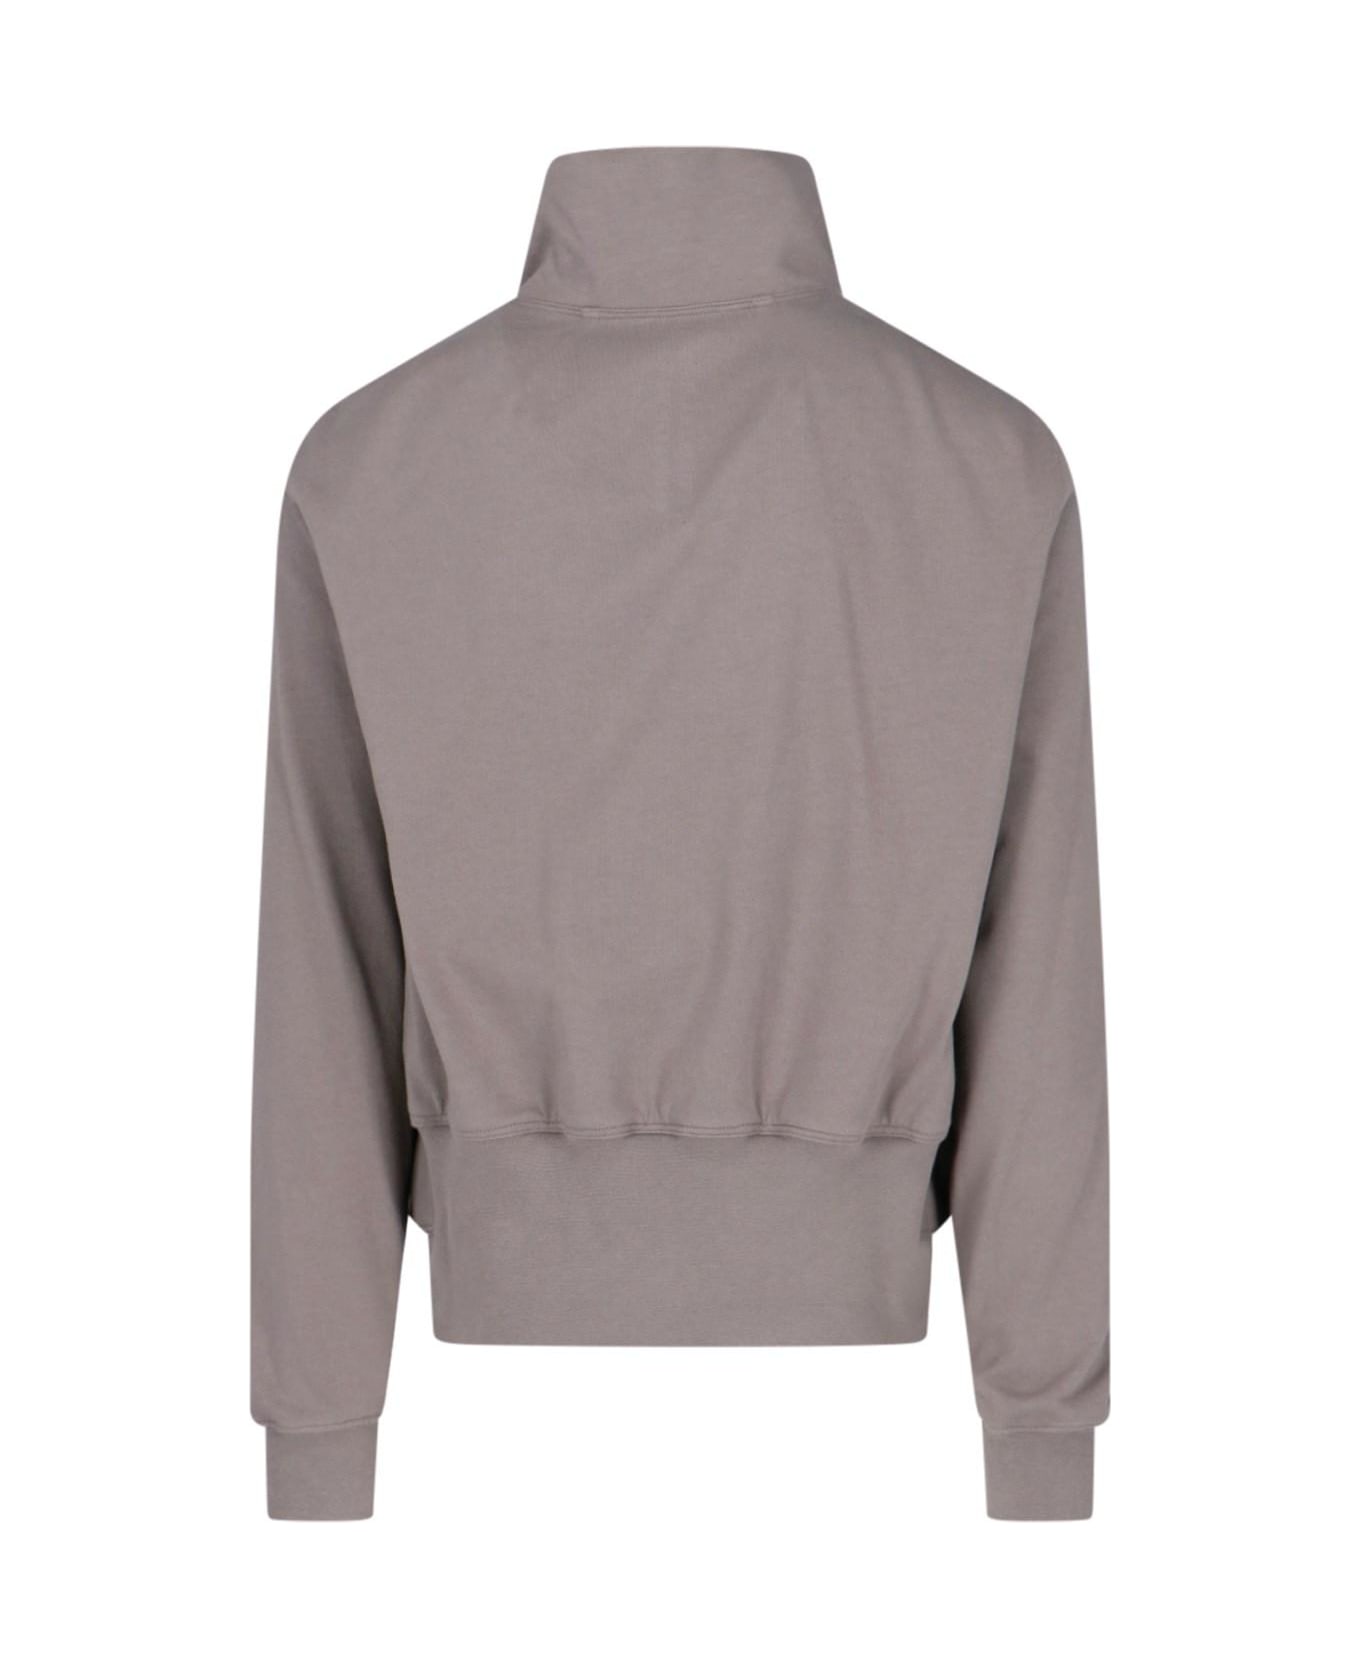 Rick Owens Asymmetrical Zip Sweatshirt - Dust